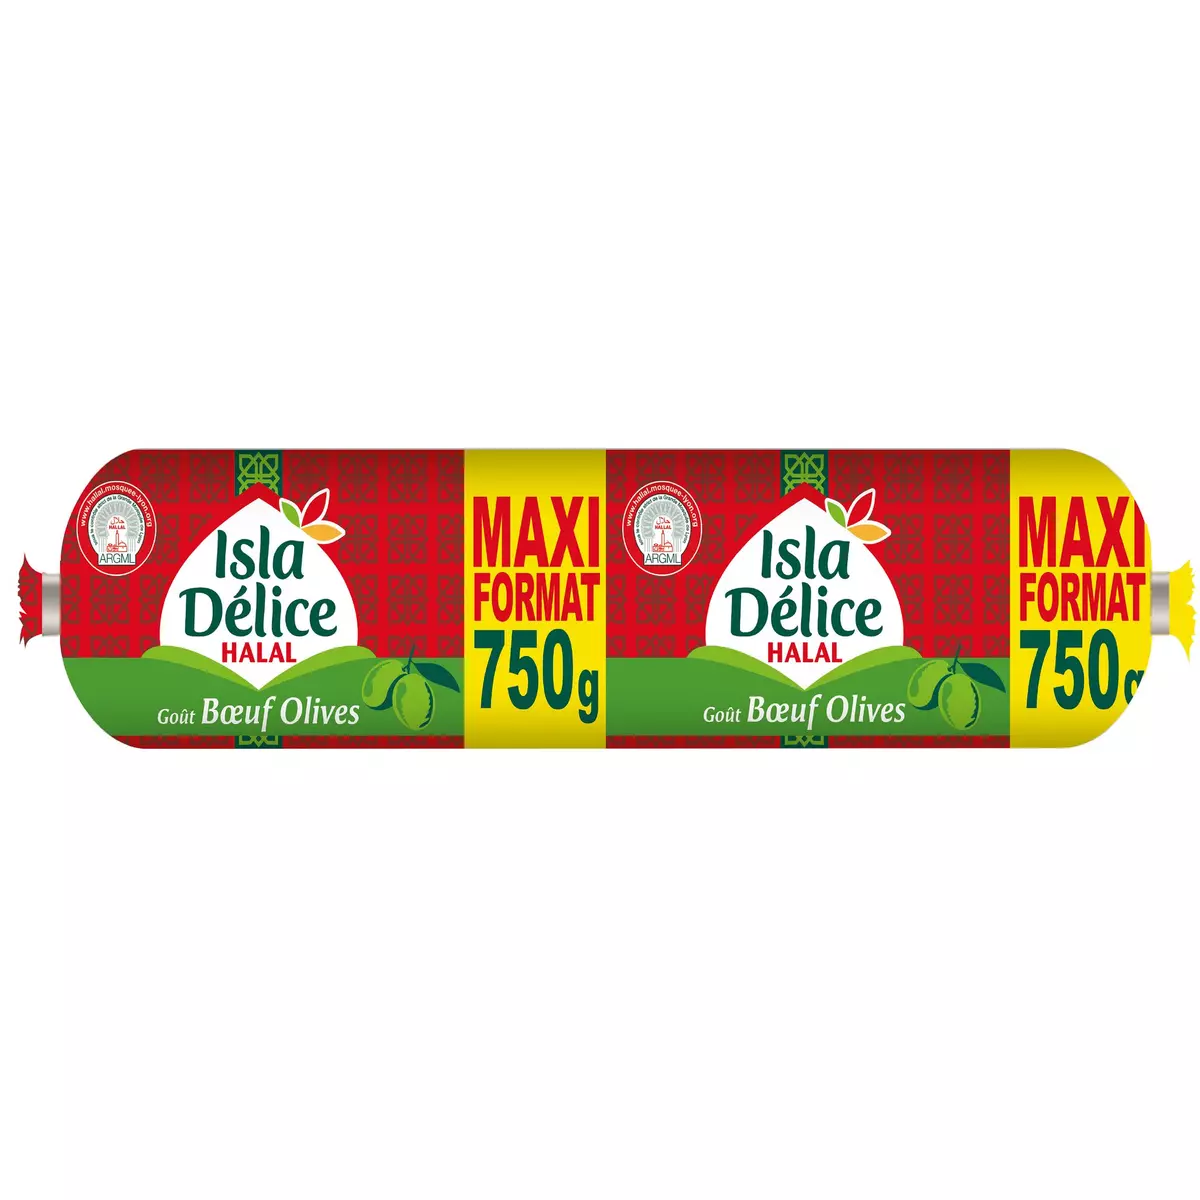 ISLA DELICE Saucisson de dinde halal gout boeuf olives 750g